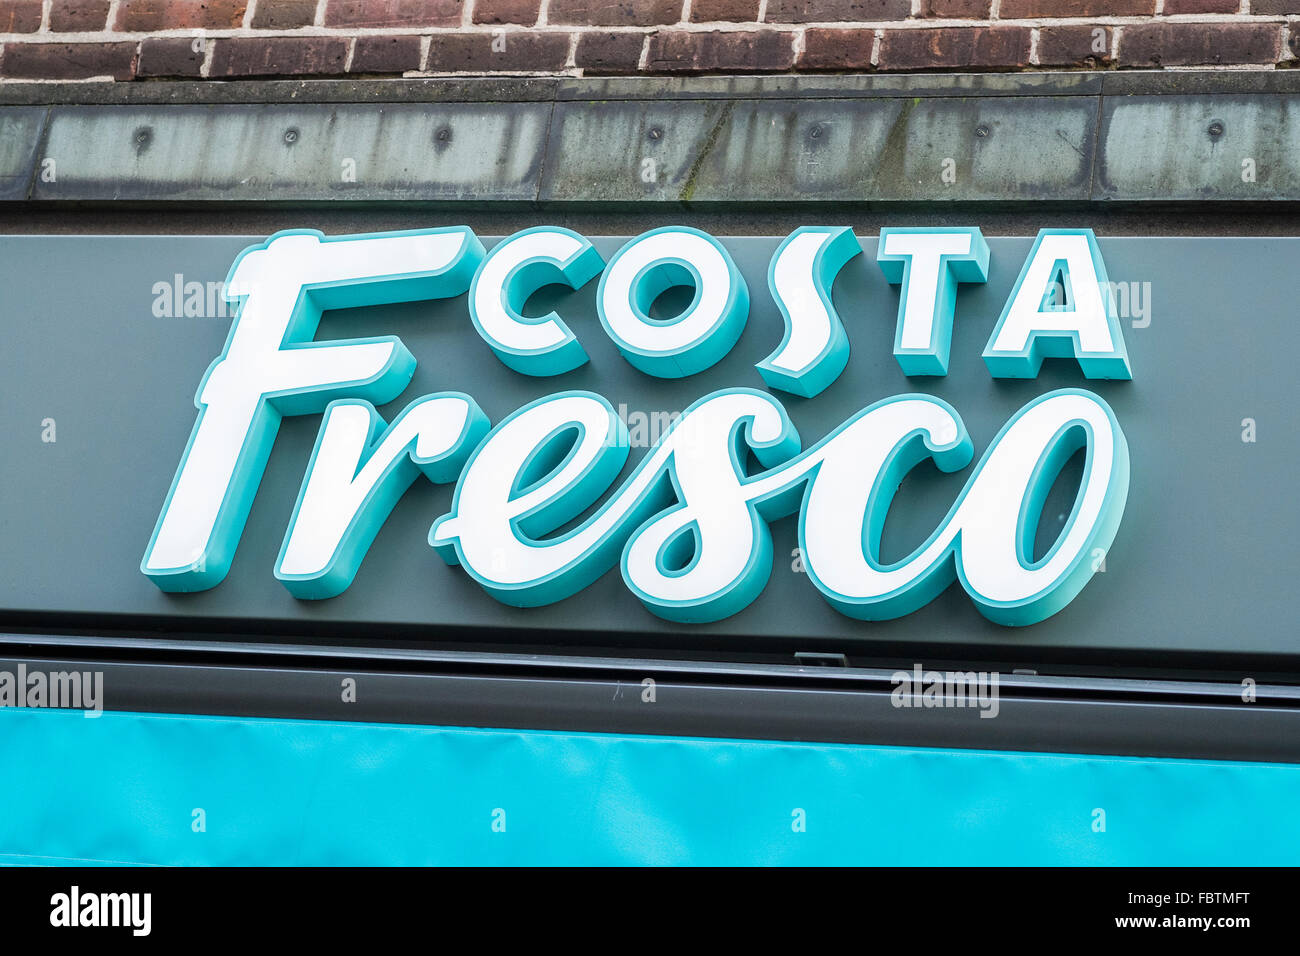 Costa-Fresko, Tottenham Court Road, London, England, U.K Stockfoto